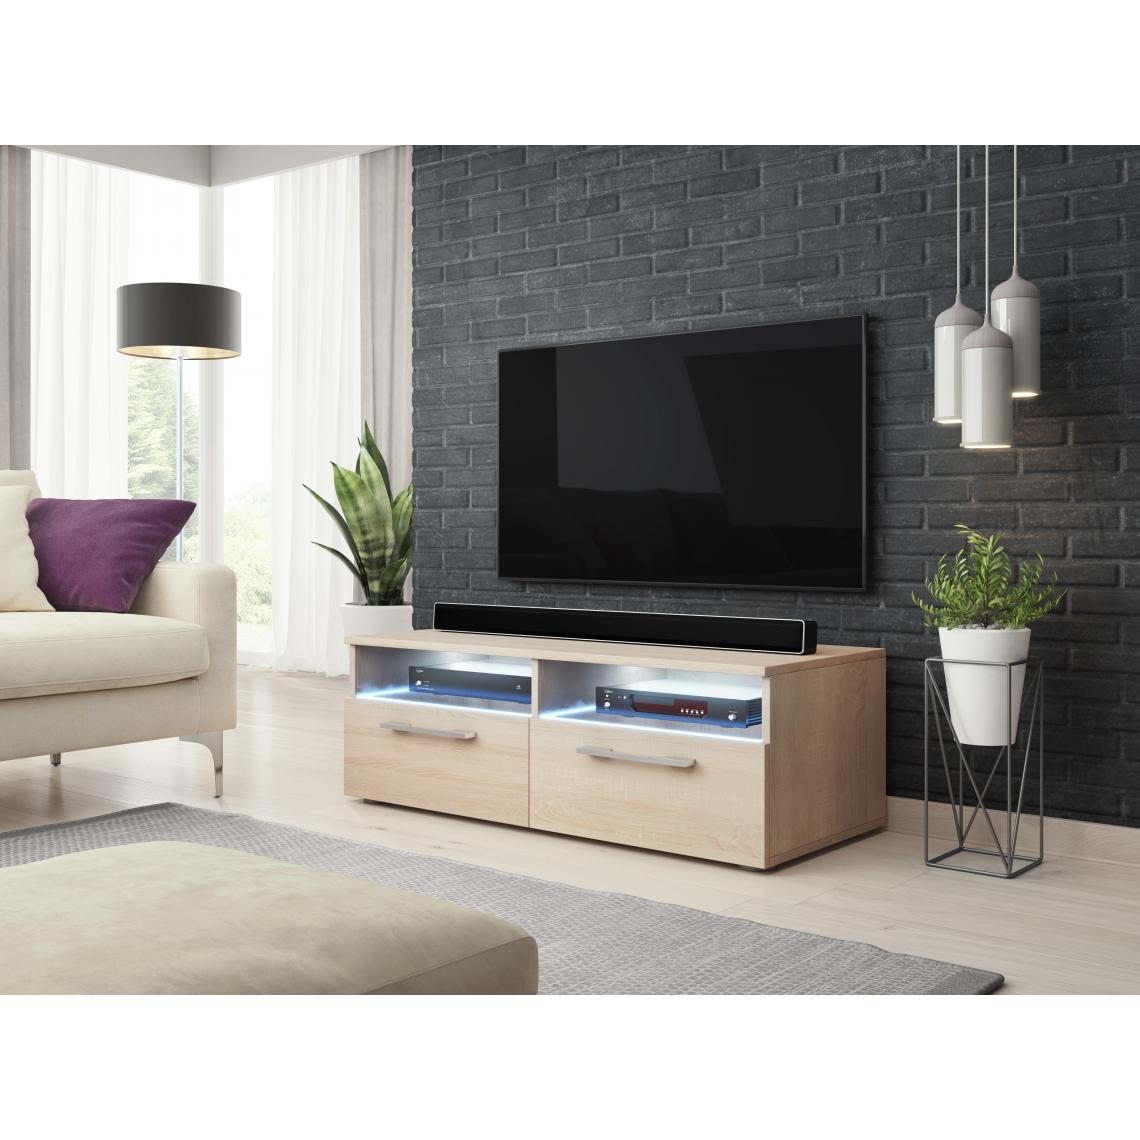 3xeliving - Meuble TV classique Zumbi Sonoma 100 cm LED - Meubles TV, Hi-Fi